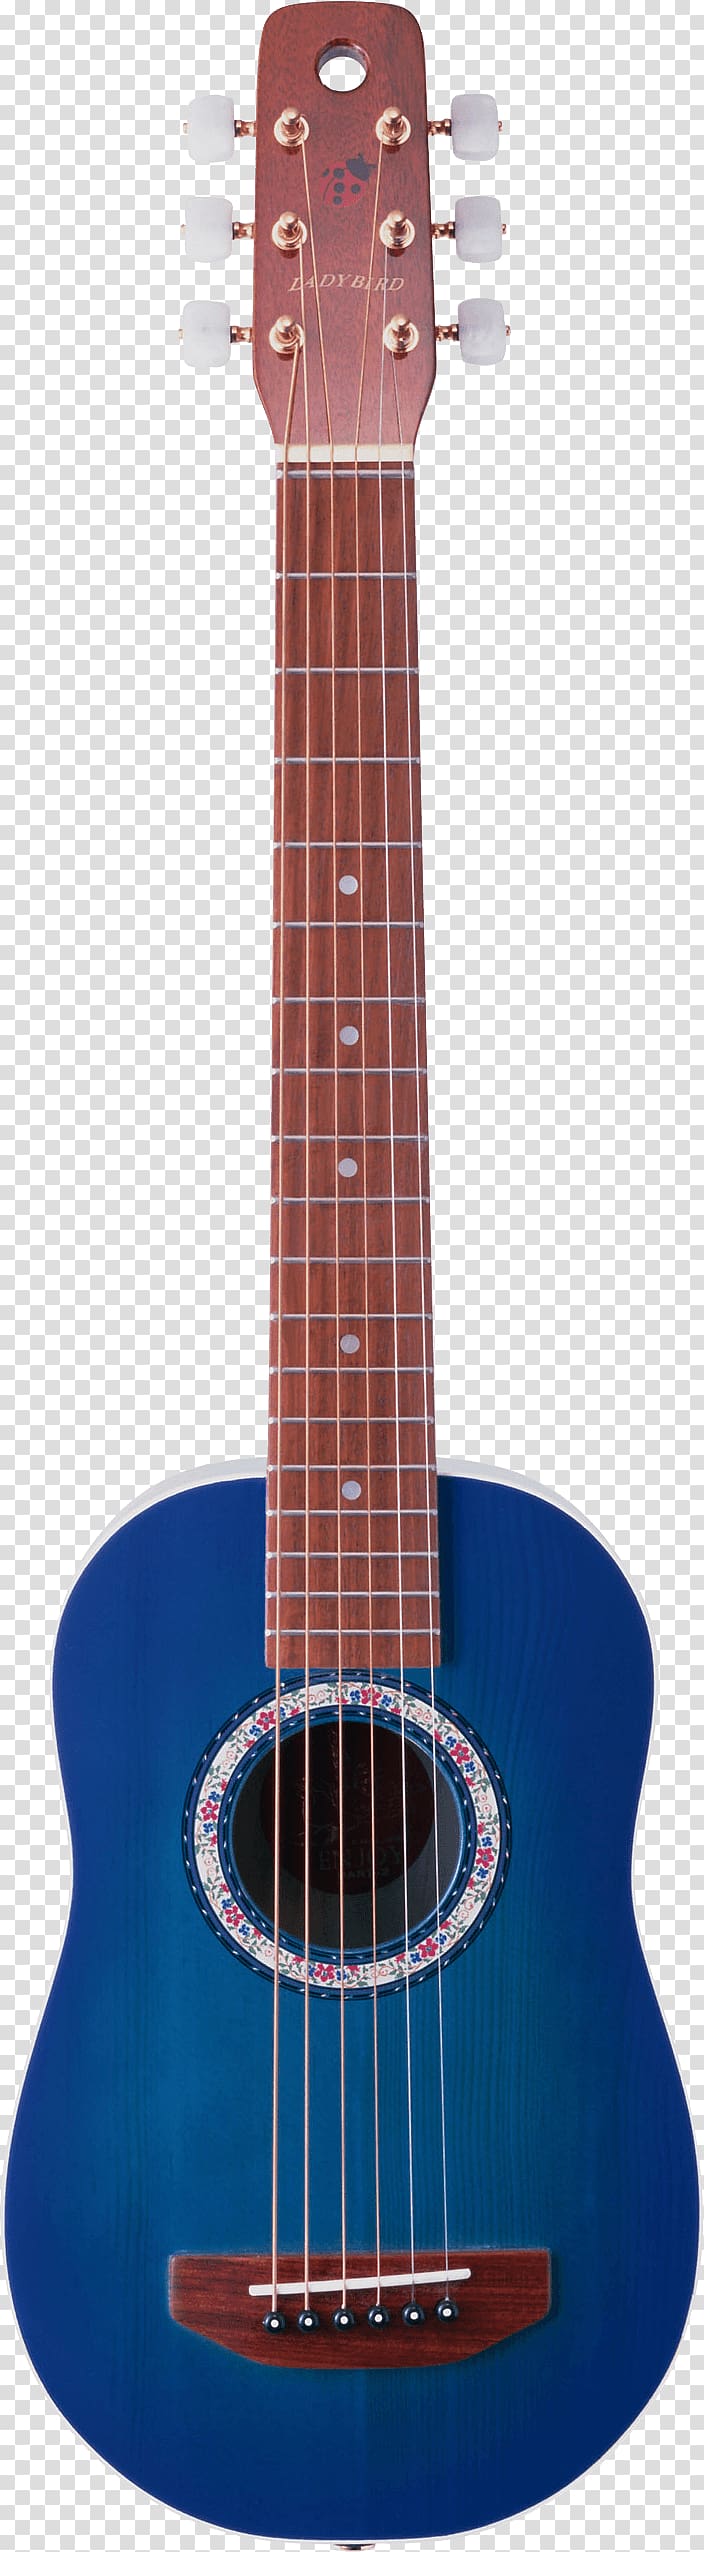 Electric guitar Gibson Les Paul Musical instrument Acoustic guitar, Guitar transparent background PNG clipart